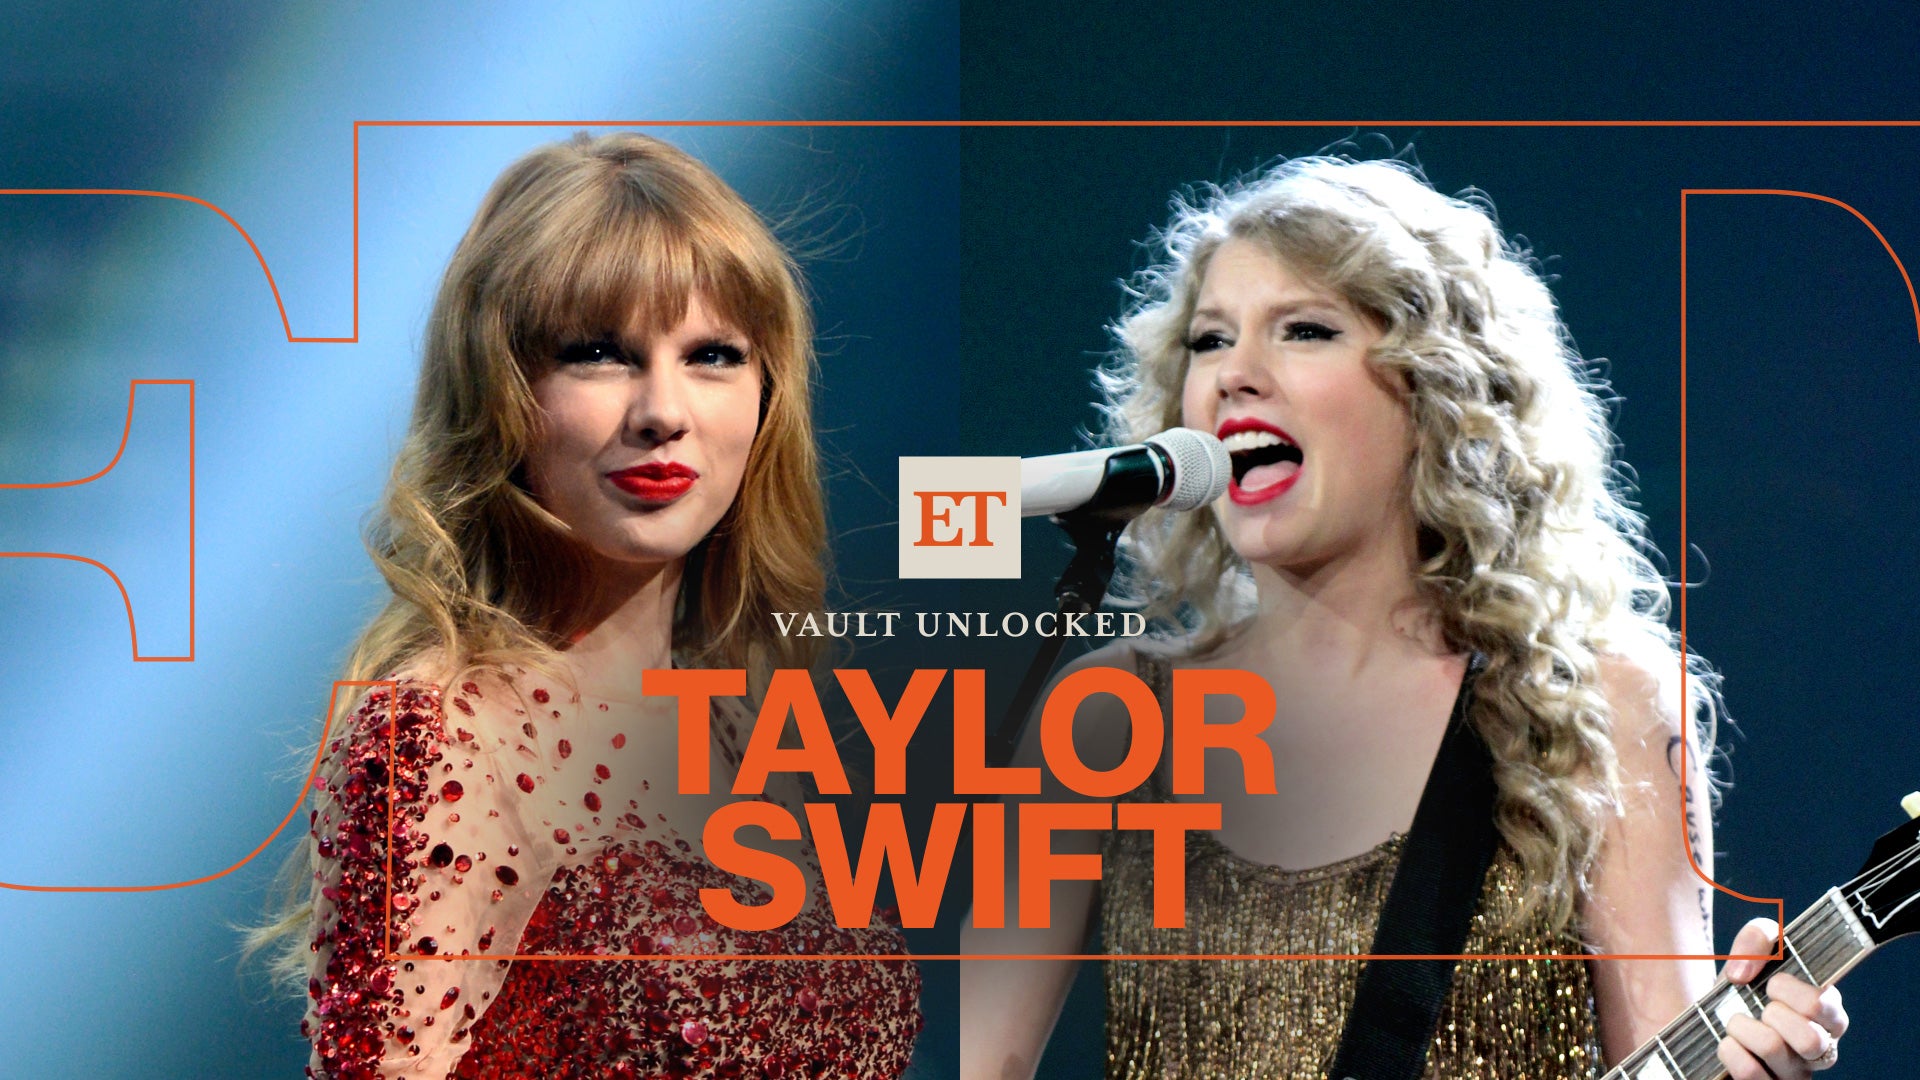 ET Vault Unlocked: Taylor Swift | Watch Her Rise to Global Superstar in Unseen Interviews